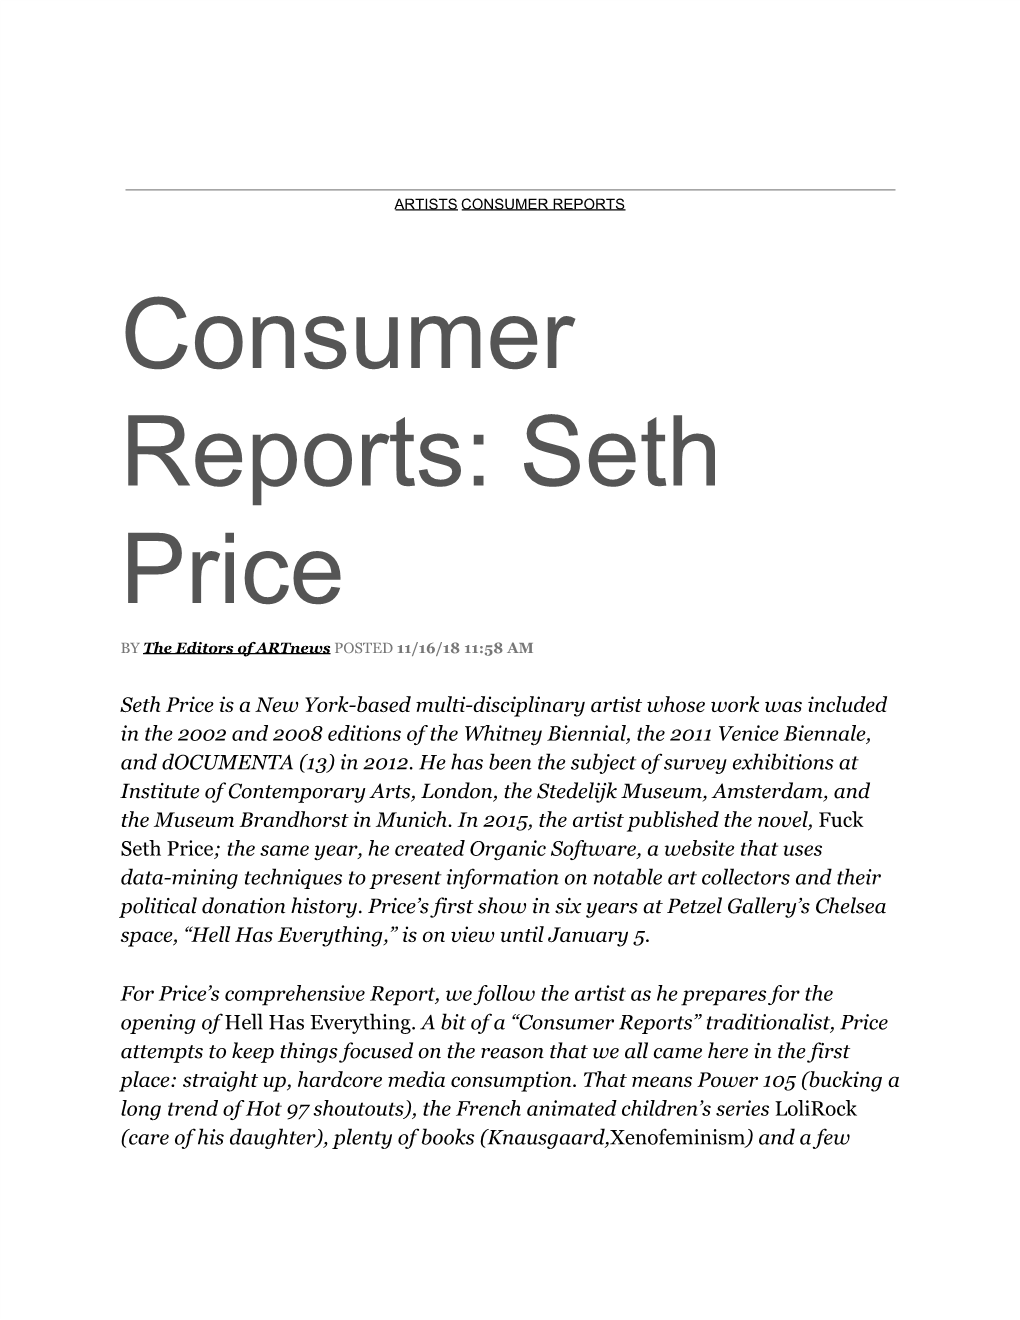 Consumer Reports: Seth Price